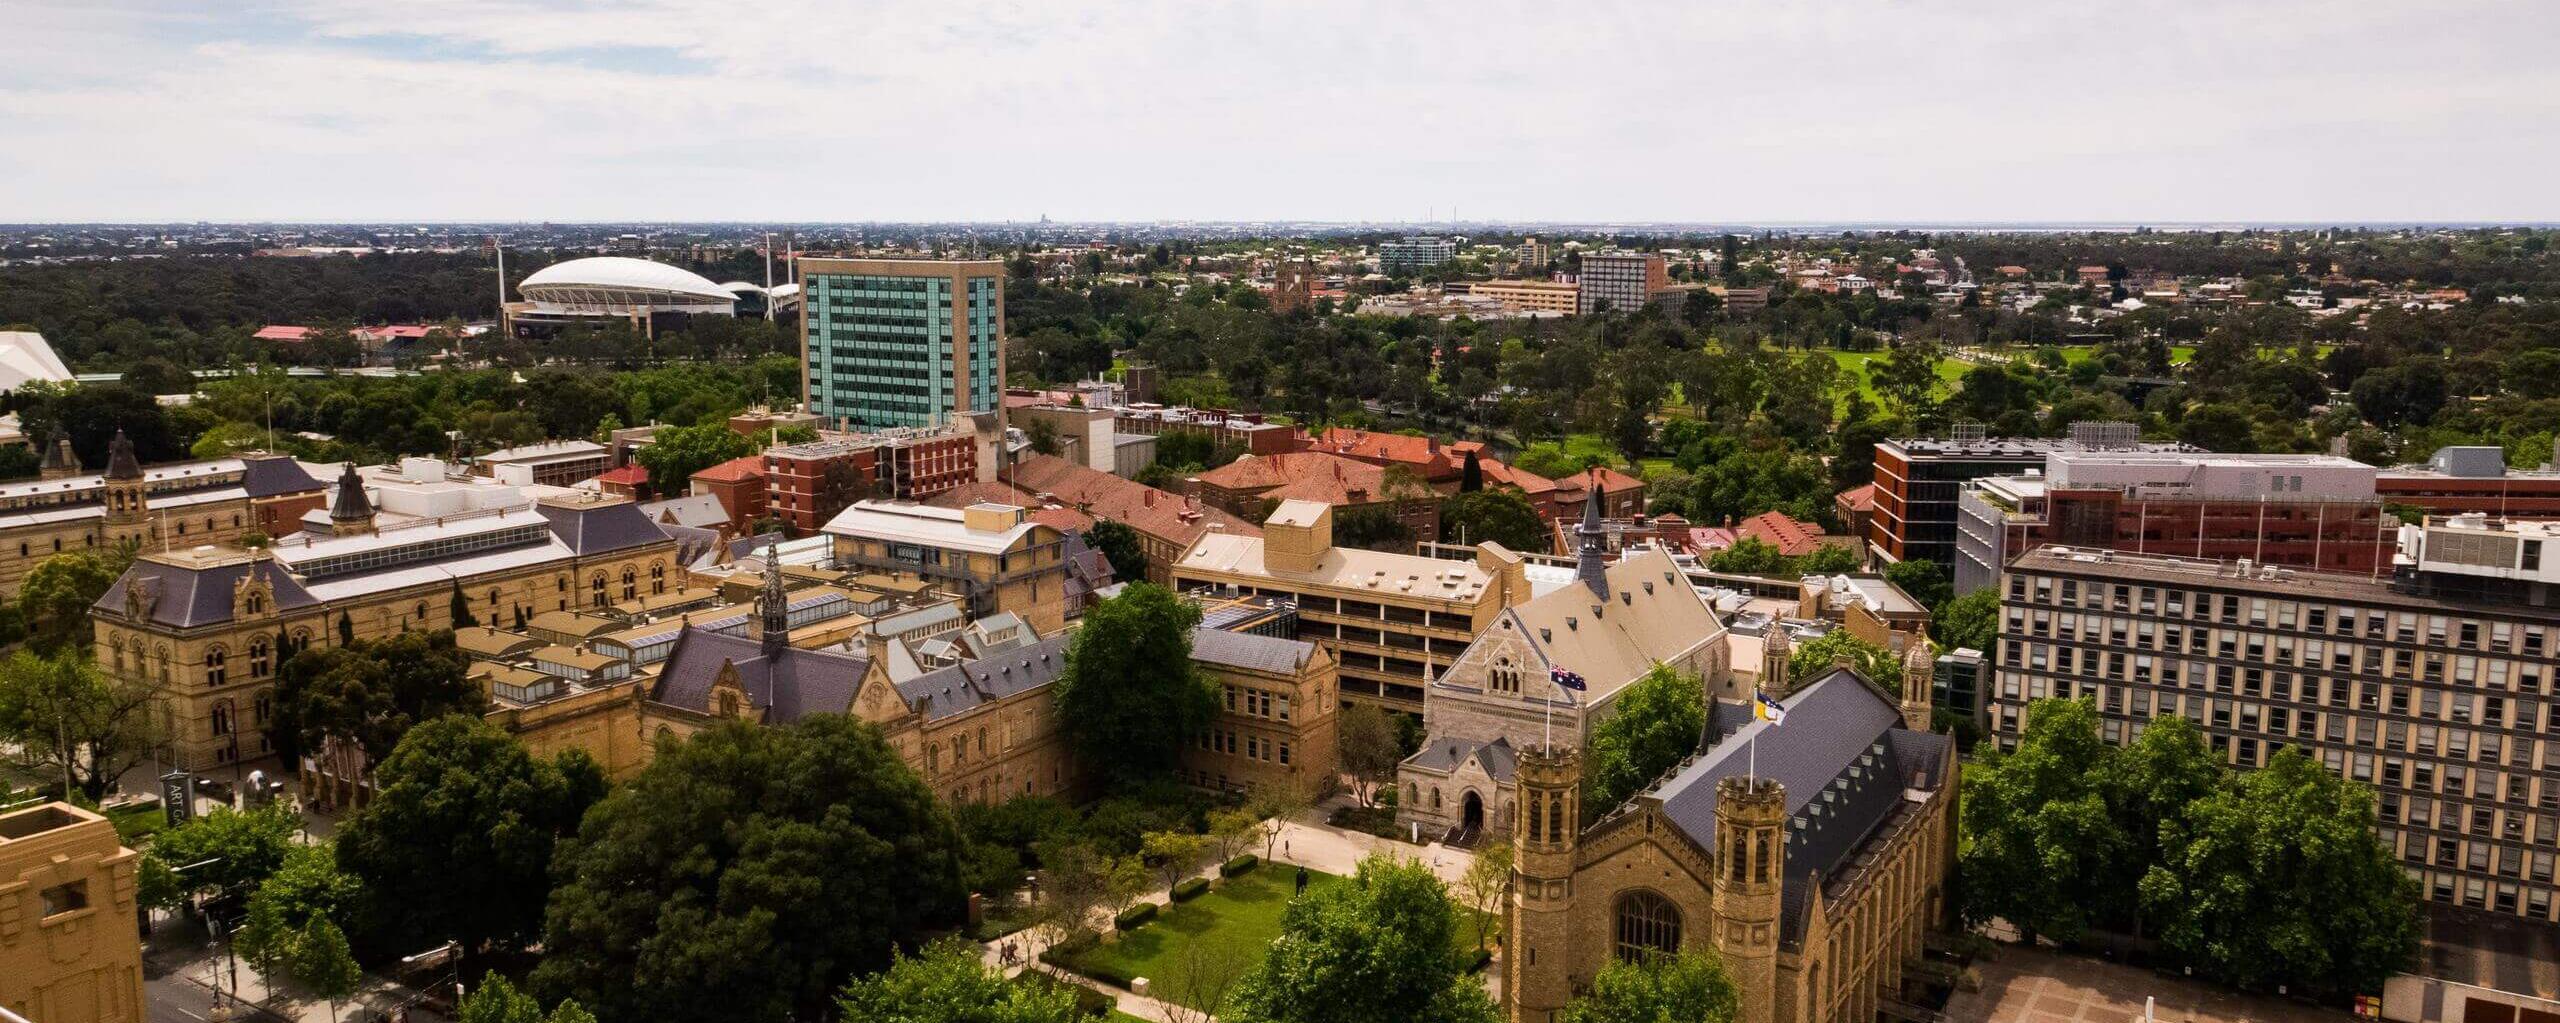 Campus North Terrace der University of Adelaide in Australien